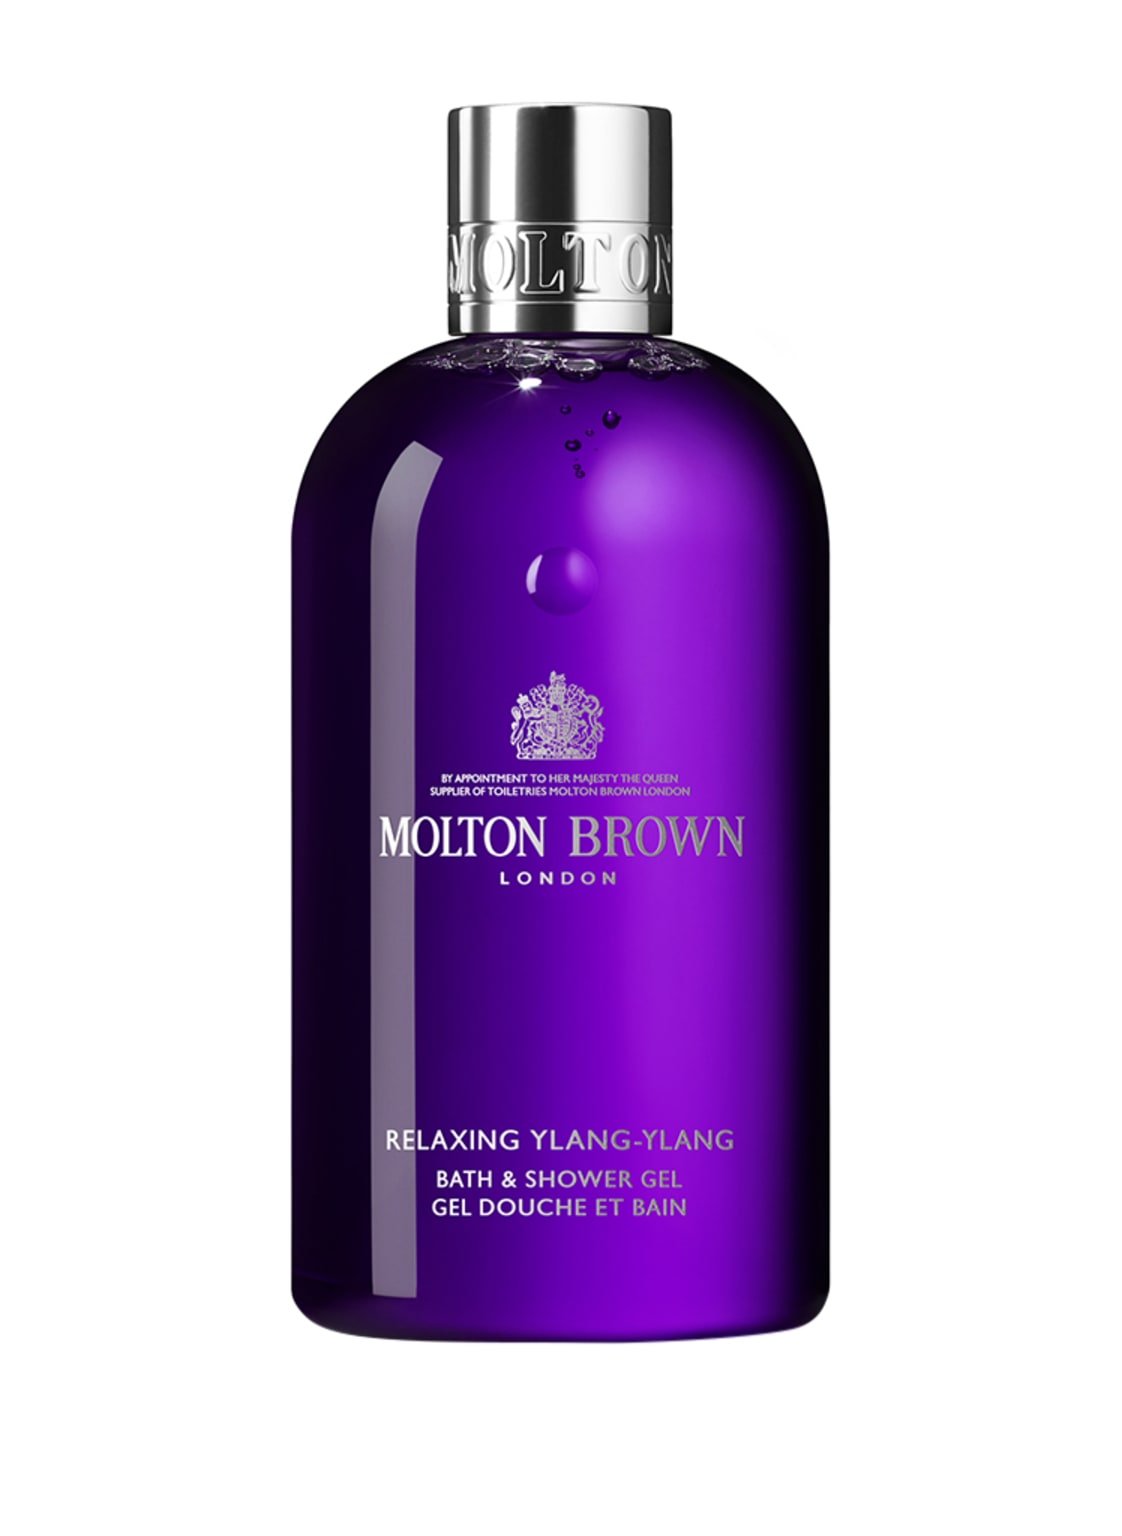 Molton Brown Relaxing Ylang-Ylang Bath & Shower Gel 300 ml von MOLTON BROWN